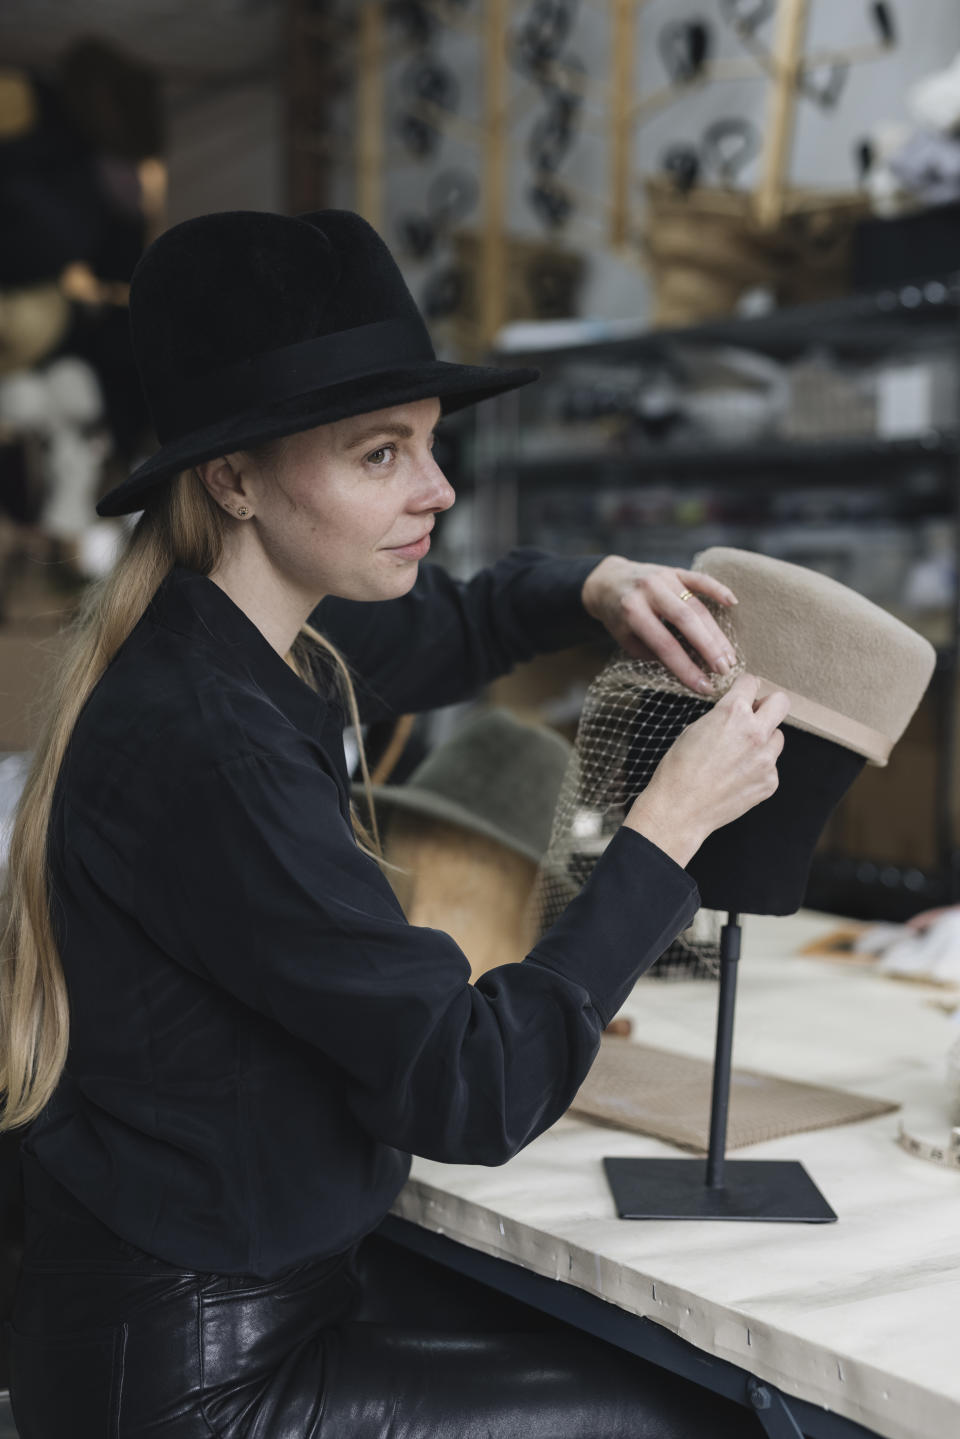 A portrait of hatmaker Gigi Burris putting a veil on one of her hats